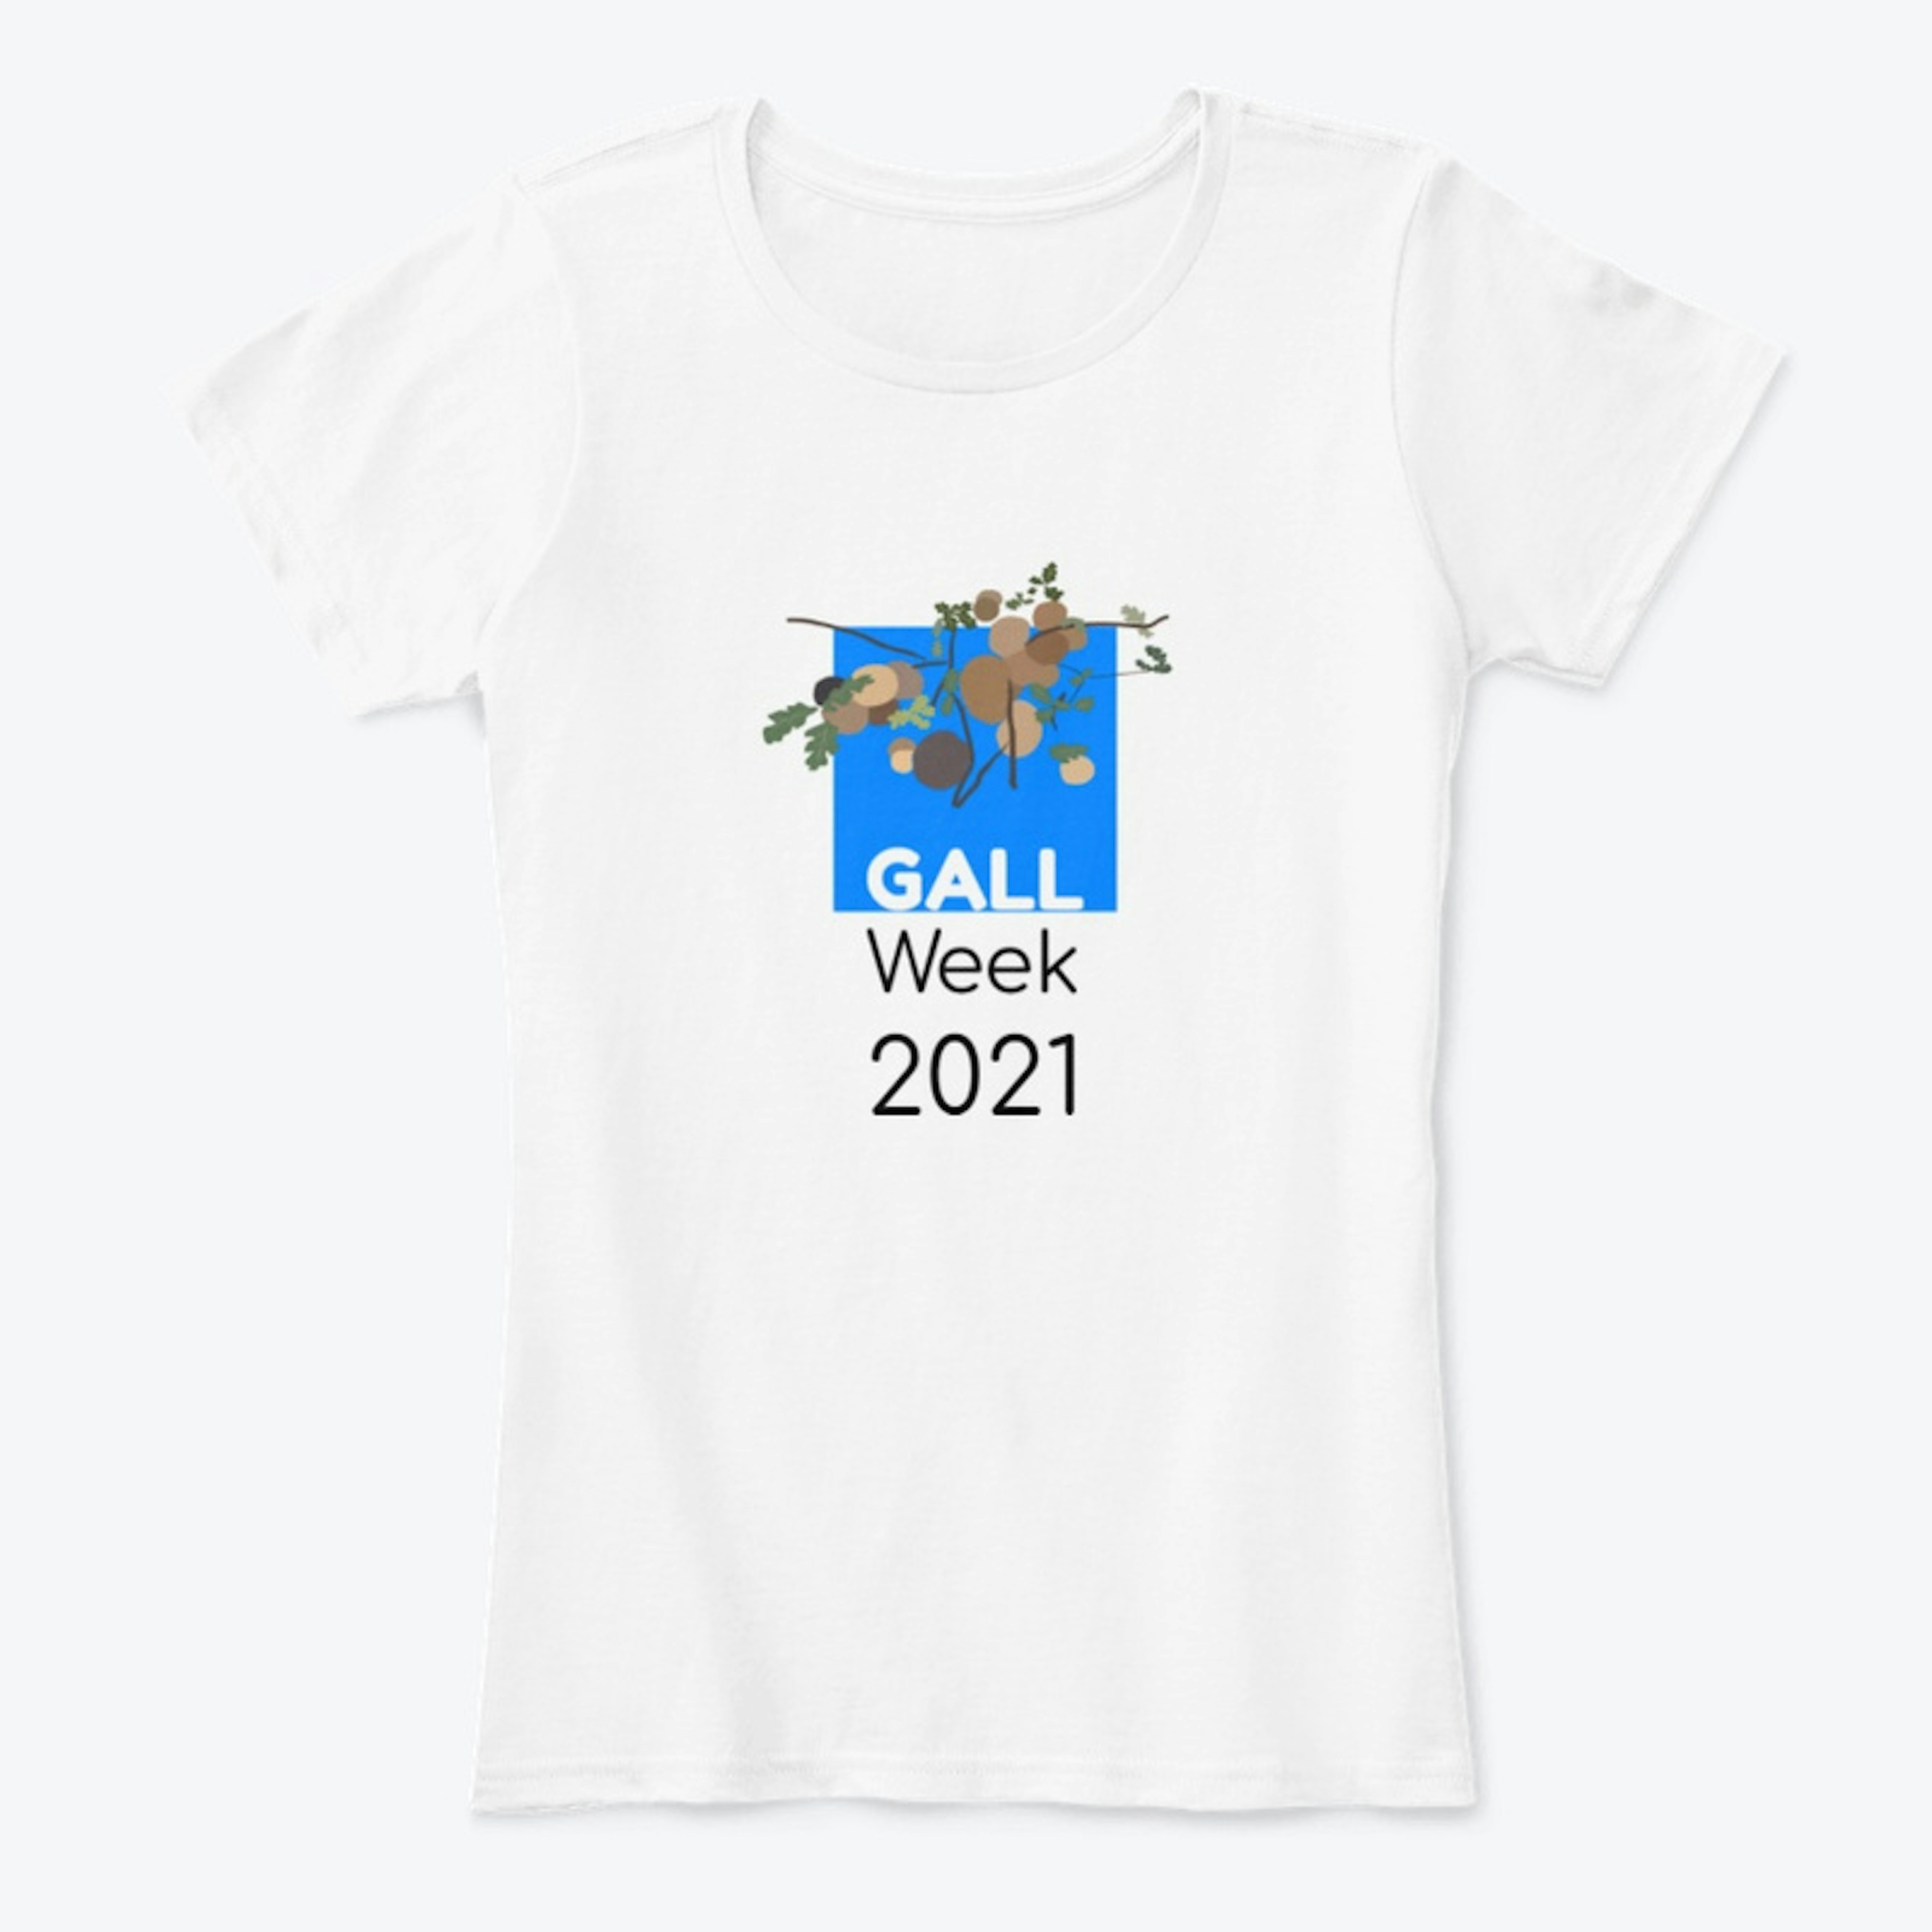 Gall Week 2021 T-shirt